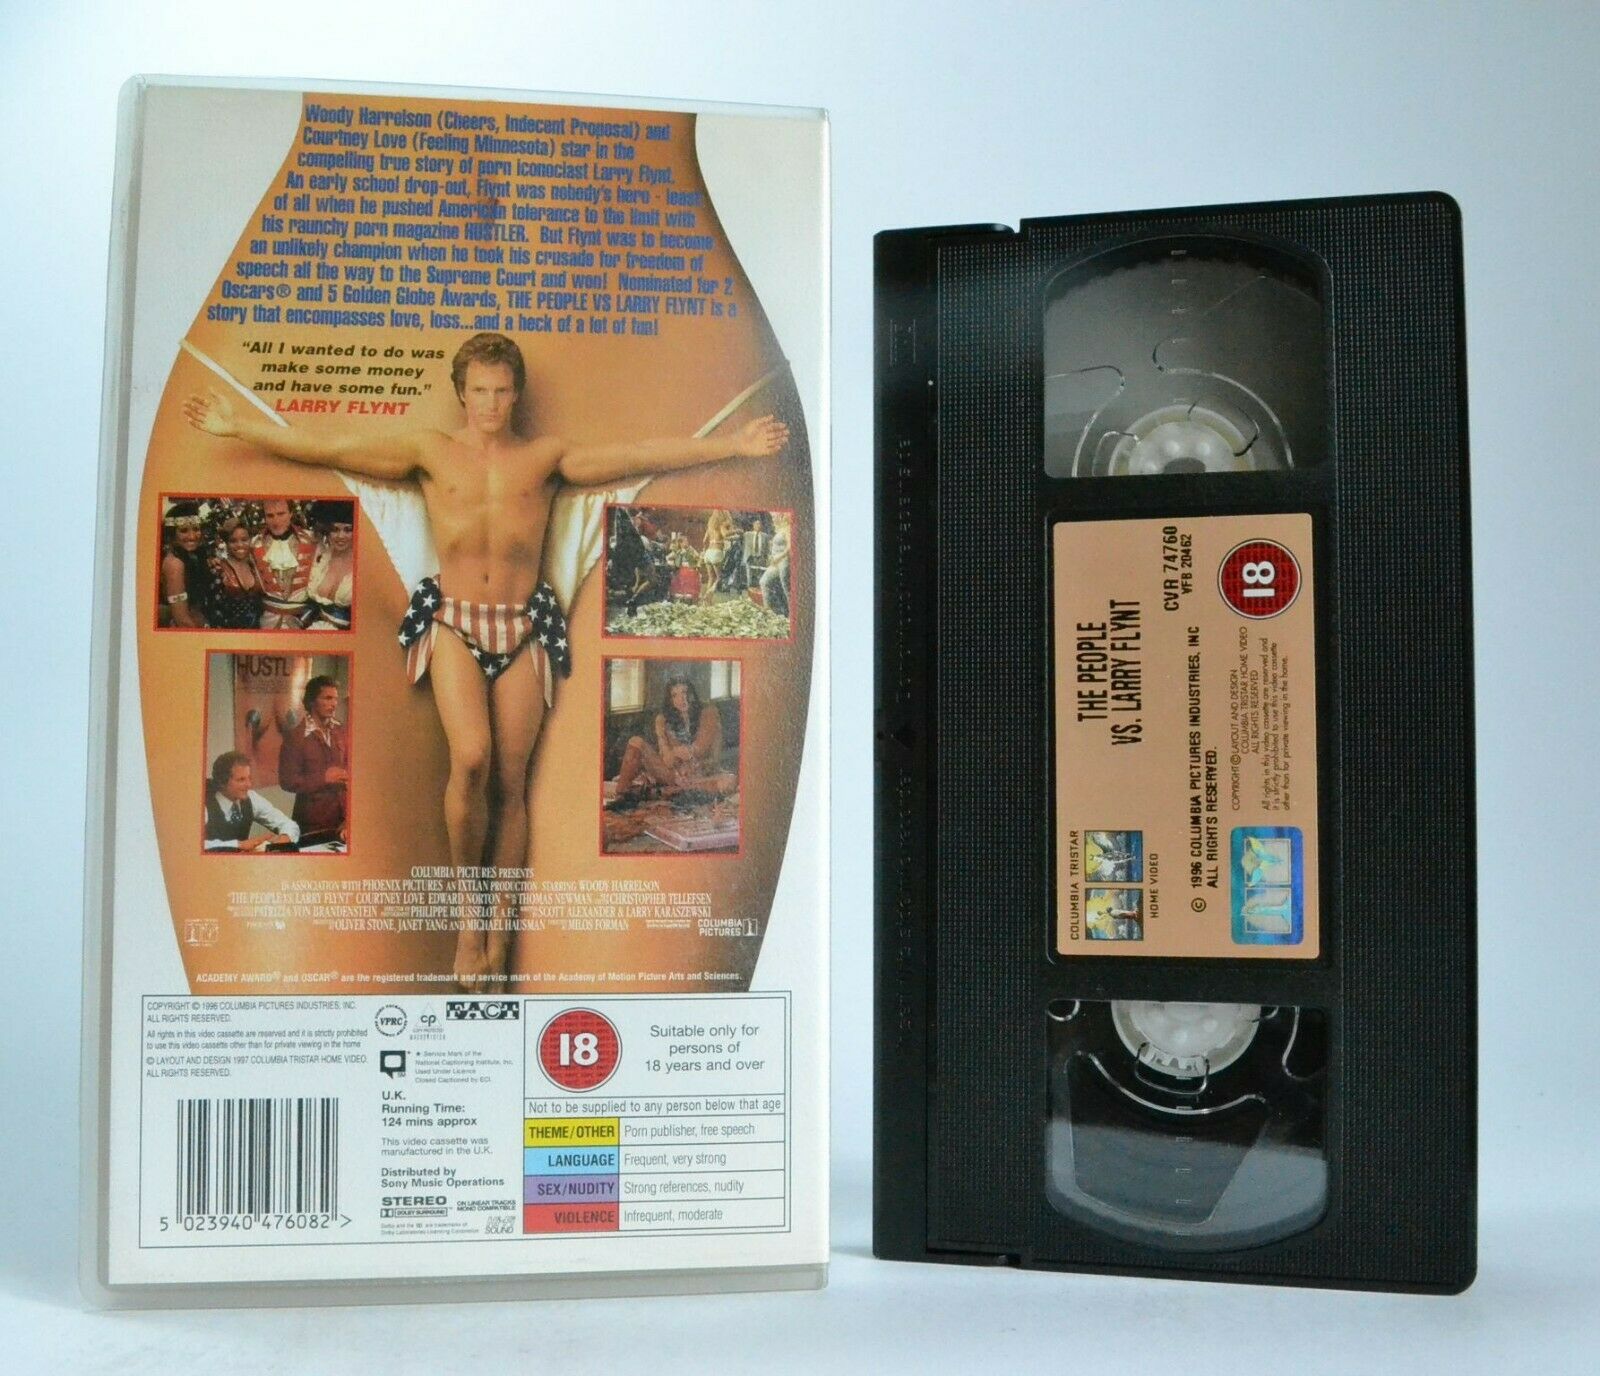 The People Vs. Larry Flint: Milos Forman Film (1996) - Biographical Drama - VHS-